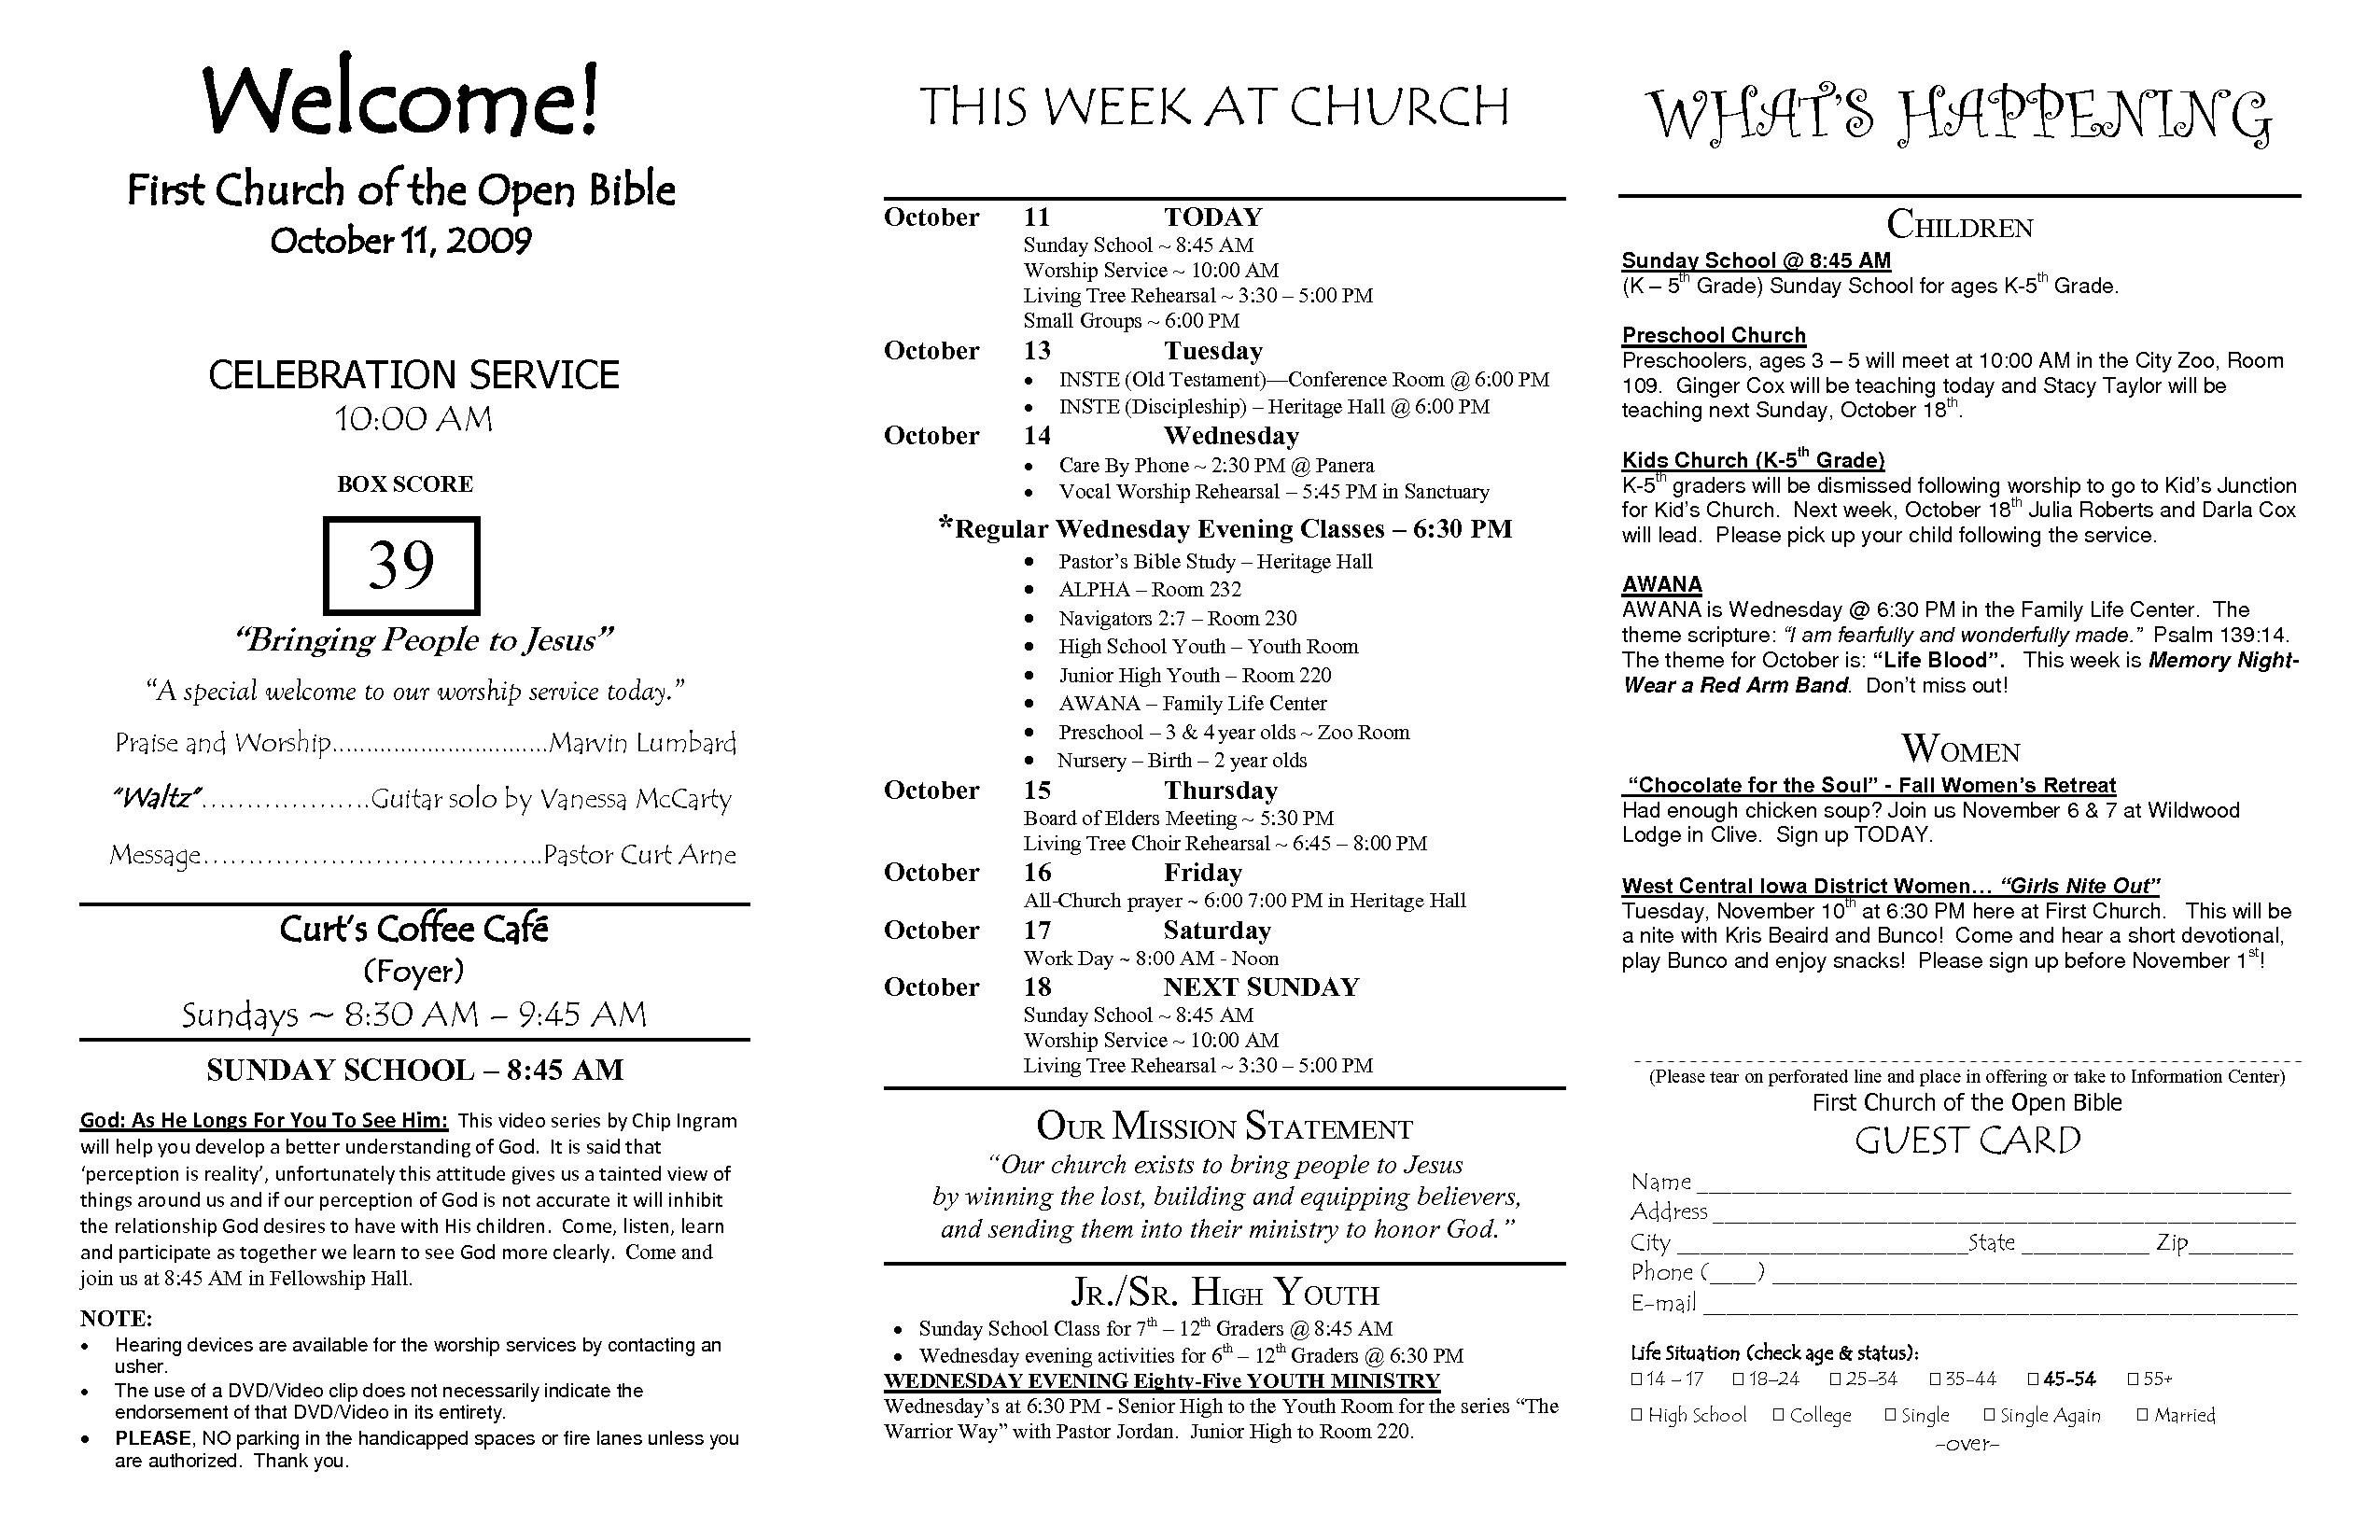 free-church-program-template-carlynstudio-us